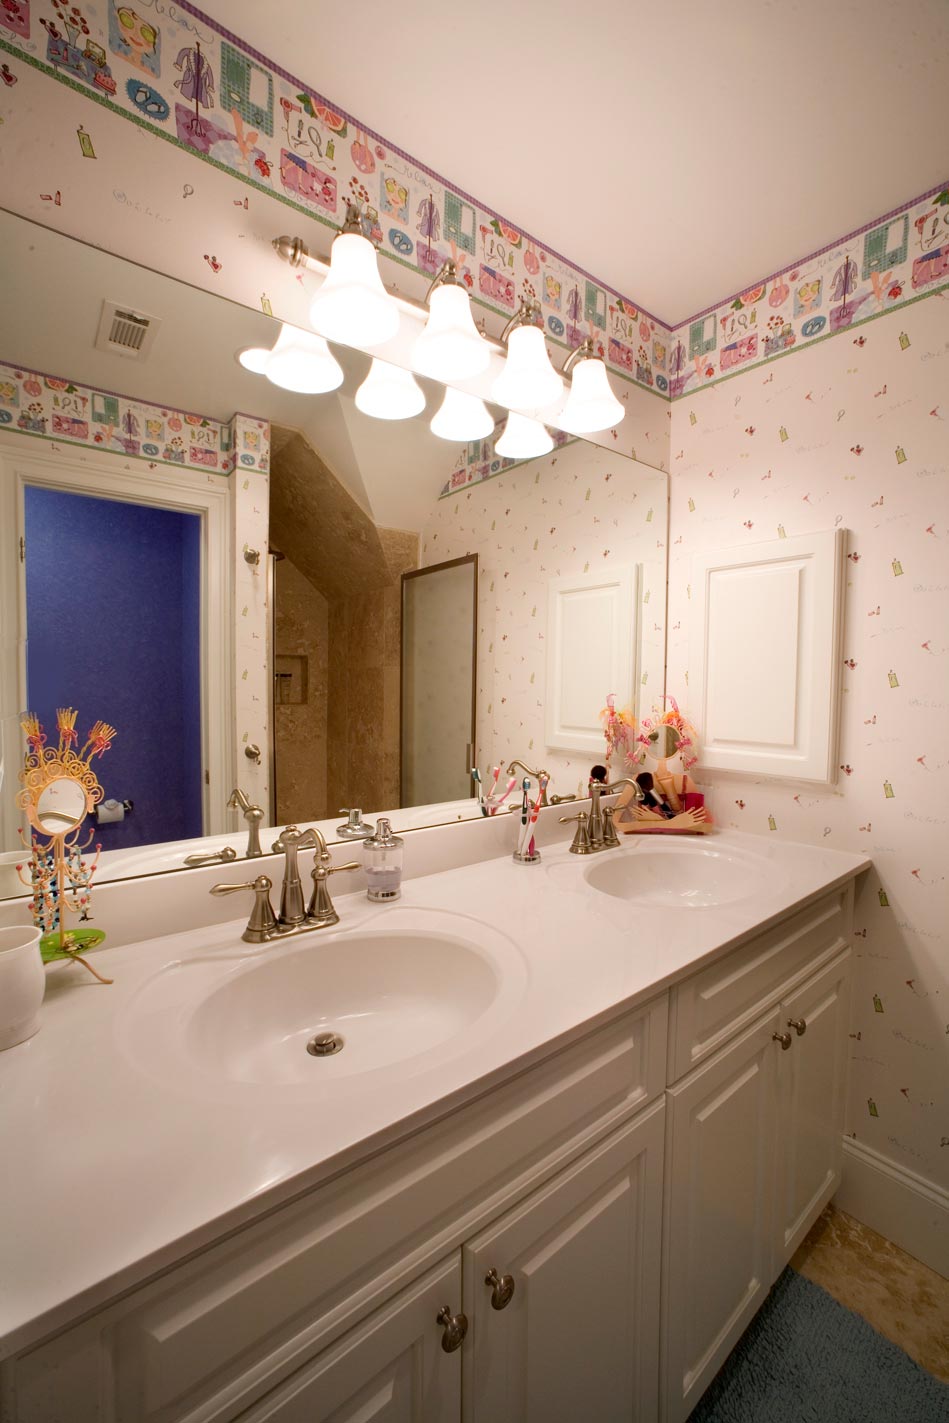 Upstairs bathroom with double vanity